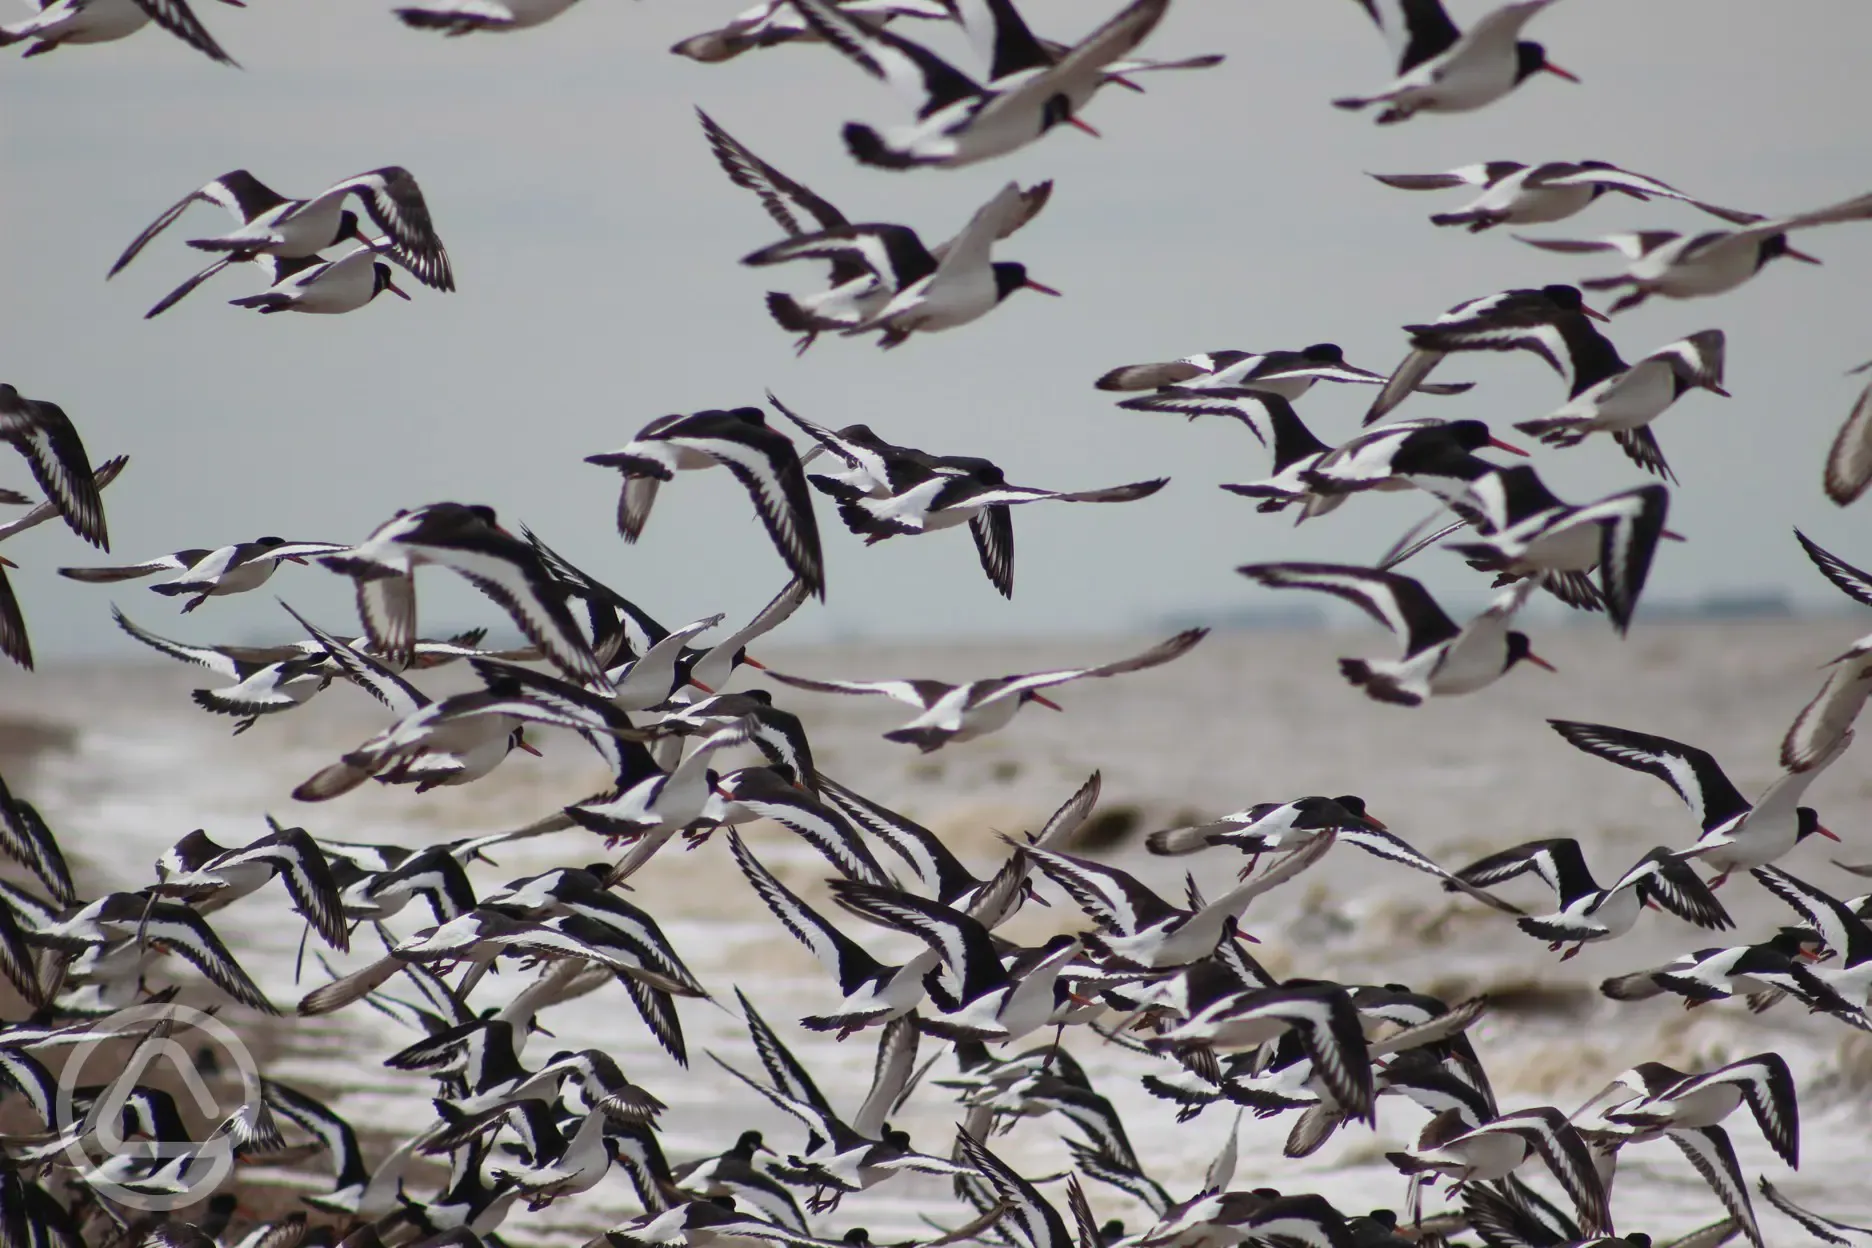 RSPB Snettisham is just a walk away- Ideal for bird watchers